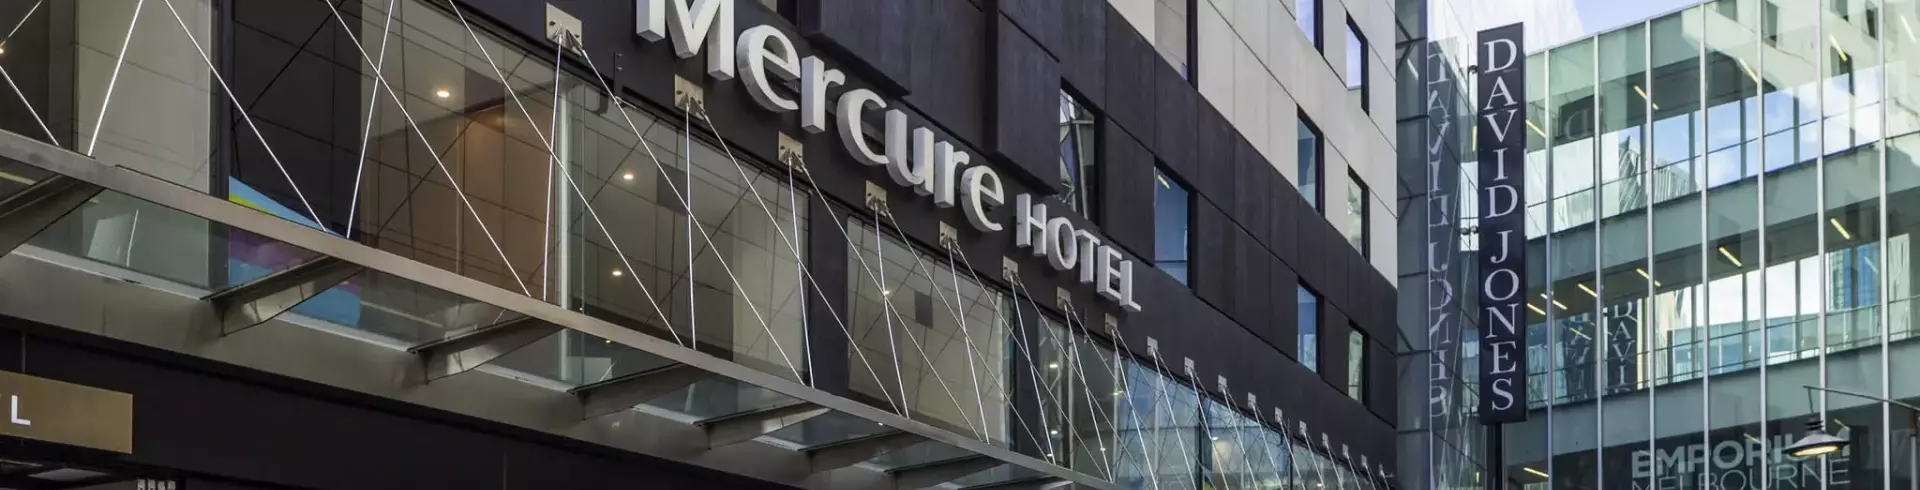 Mercure Hotel Welcome Melbourne